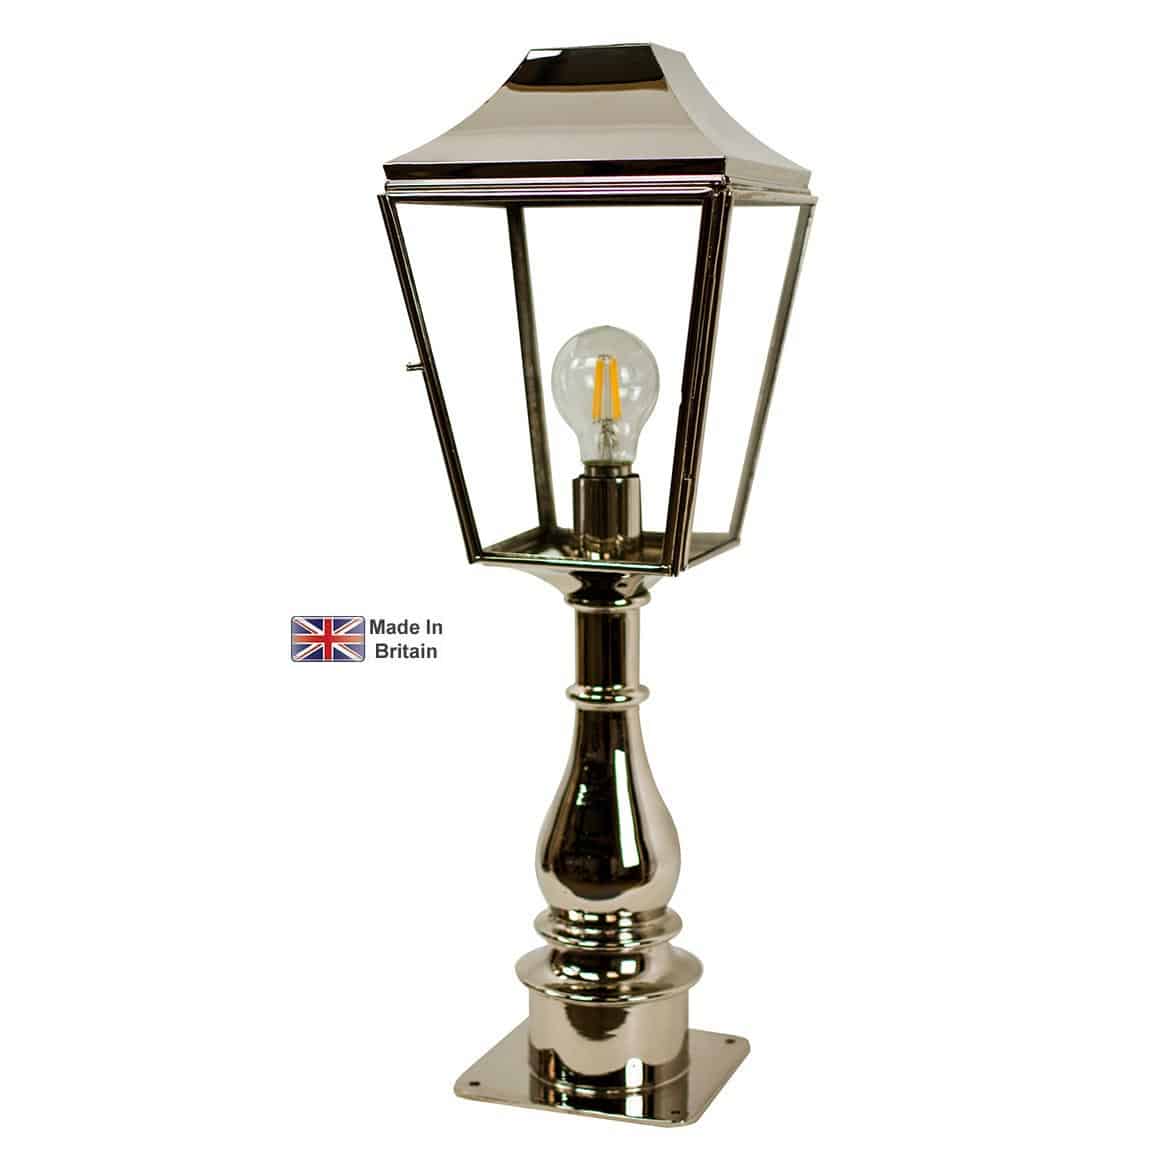 Knightsbridge Tall 1 Light Outdoor Pillar Lantern Polished Nickel